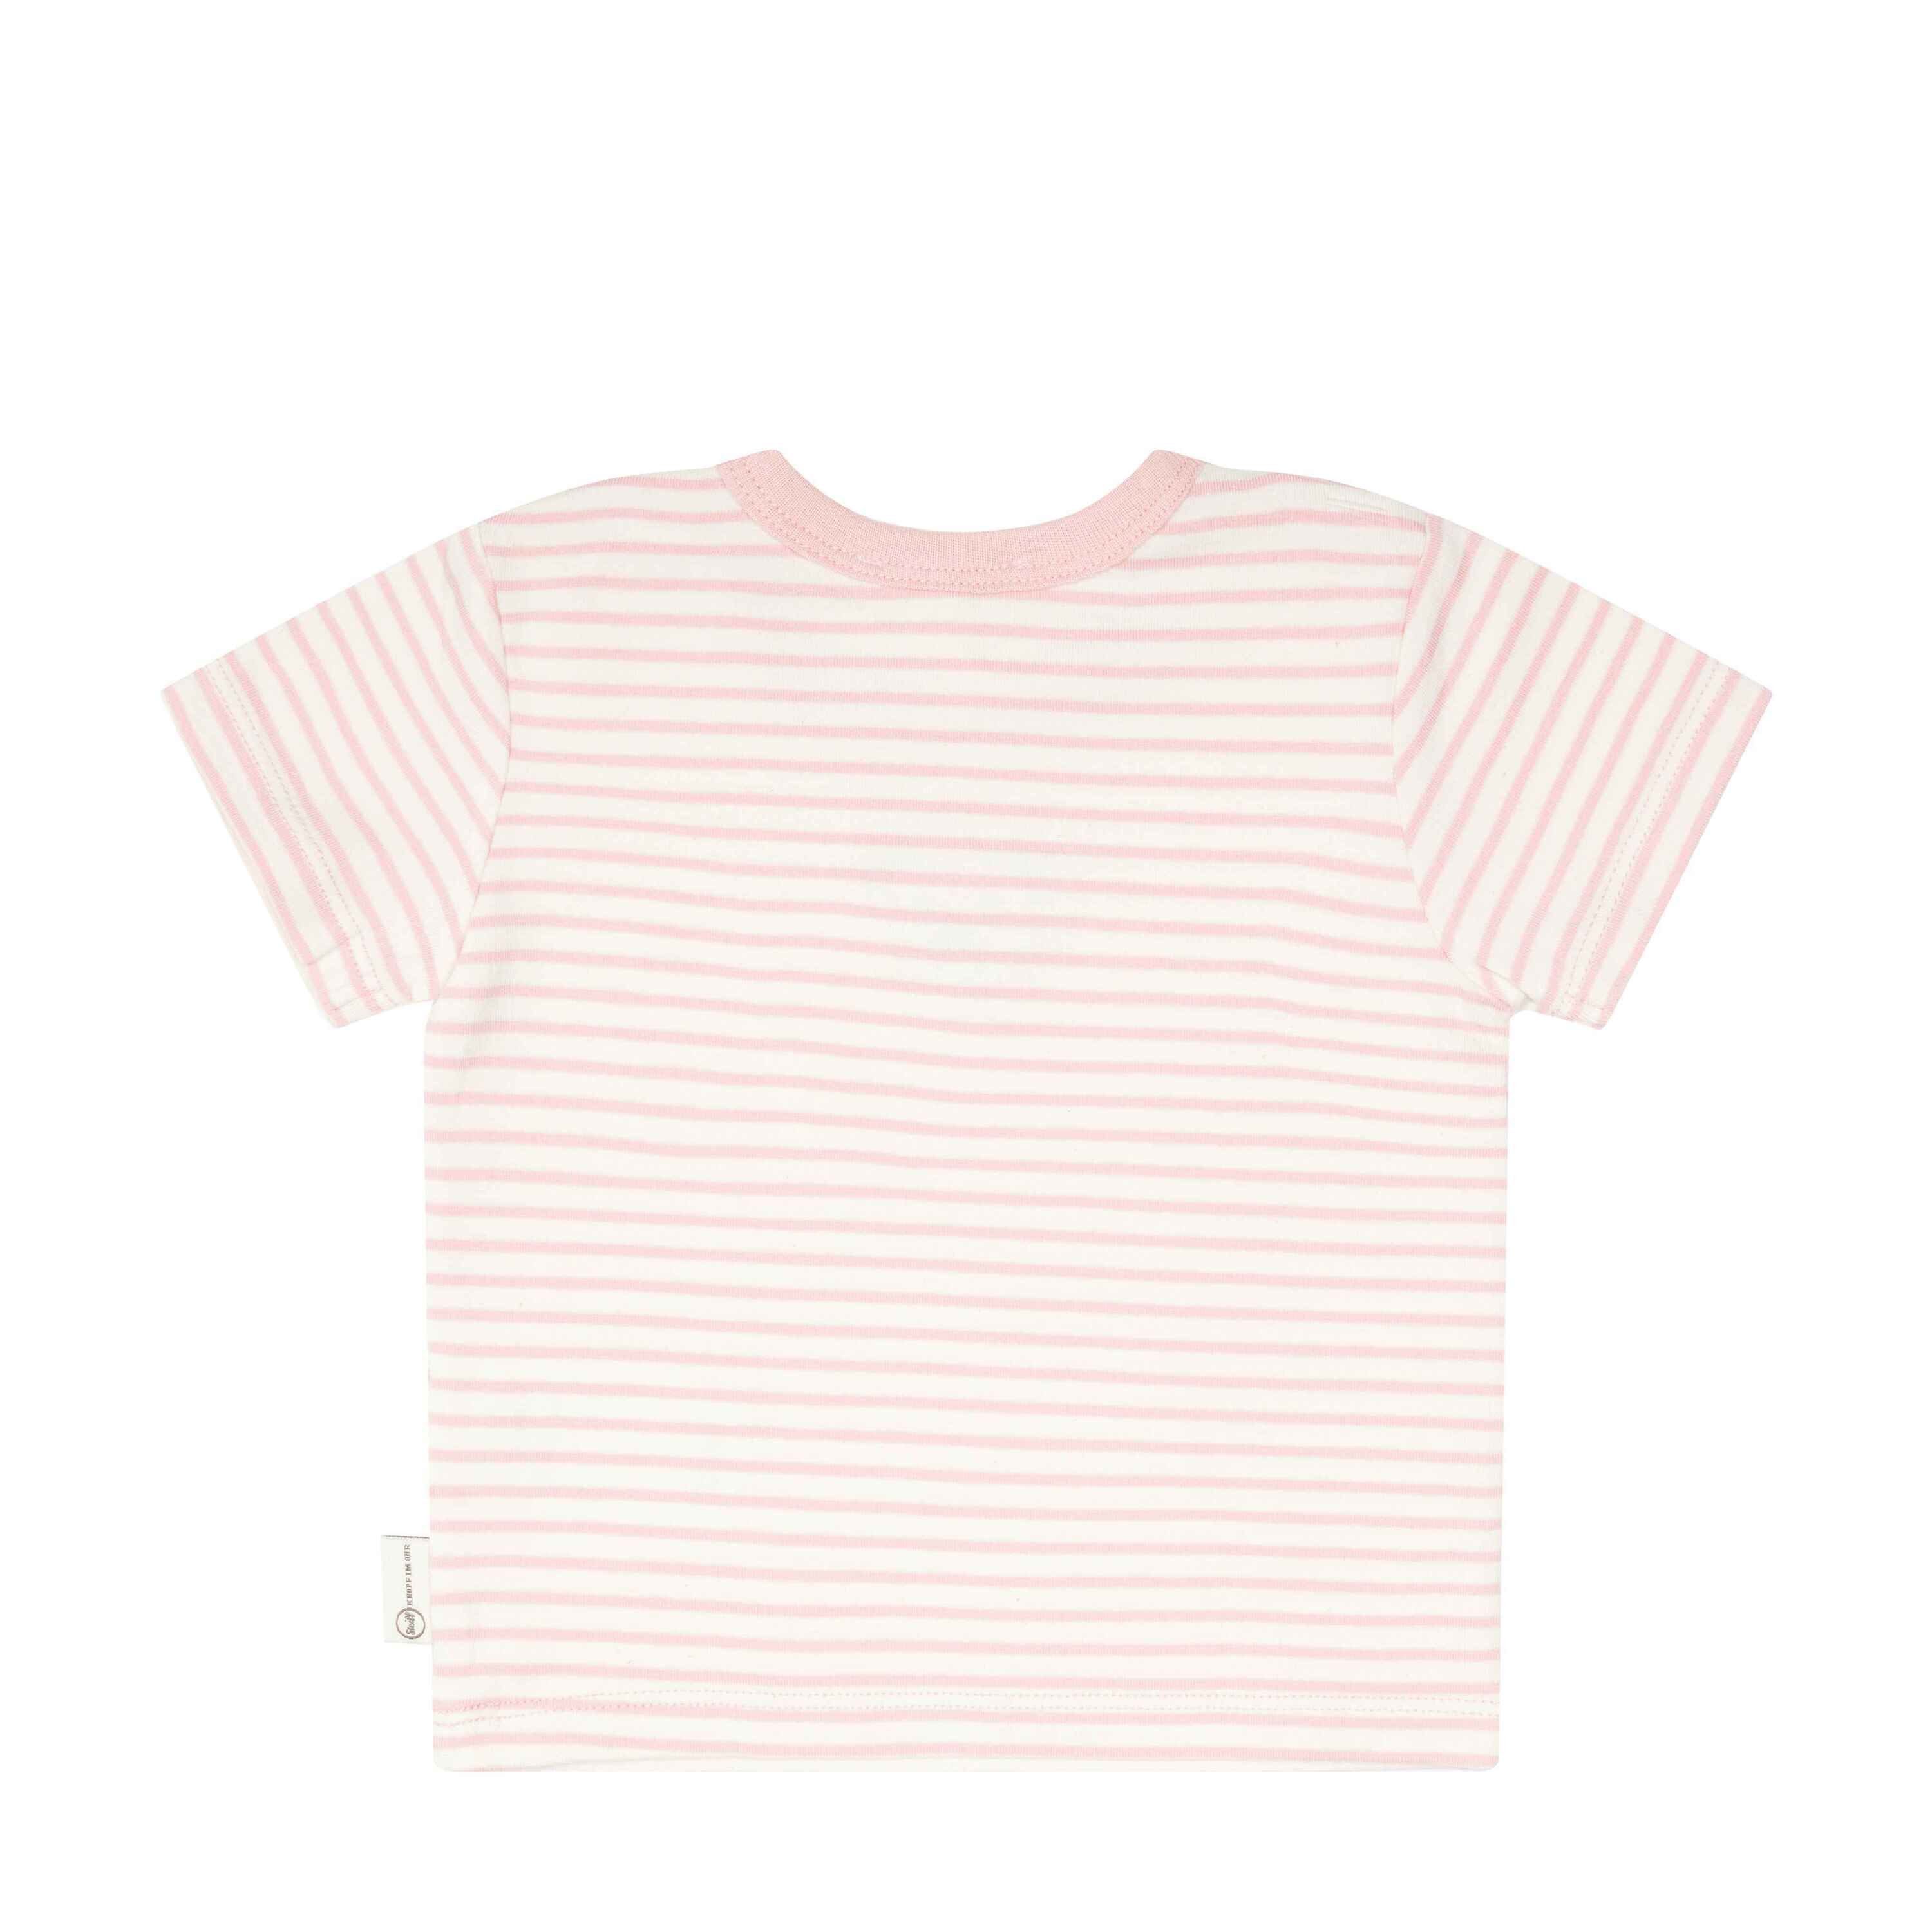 T-Shirt pink Teddykopf kurzarm mit Wellness Steiff silver T-Shirt Baby GOTS